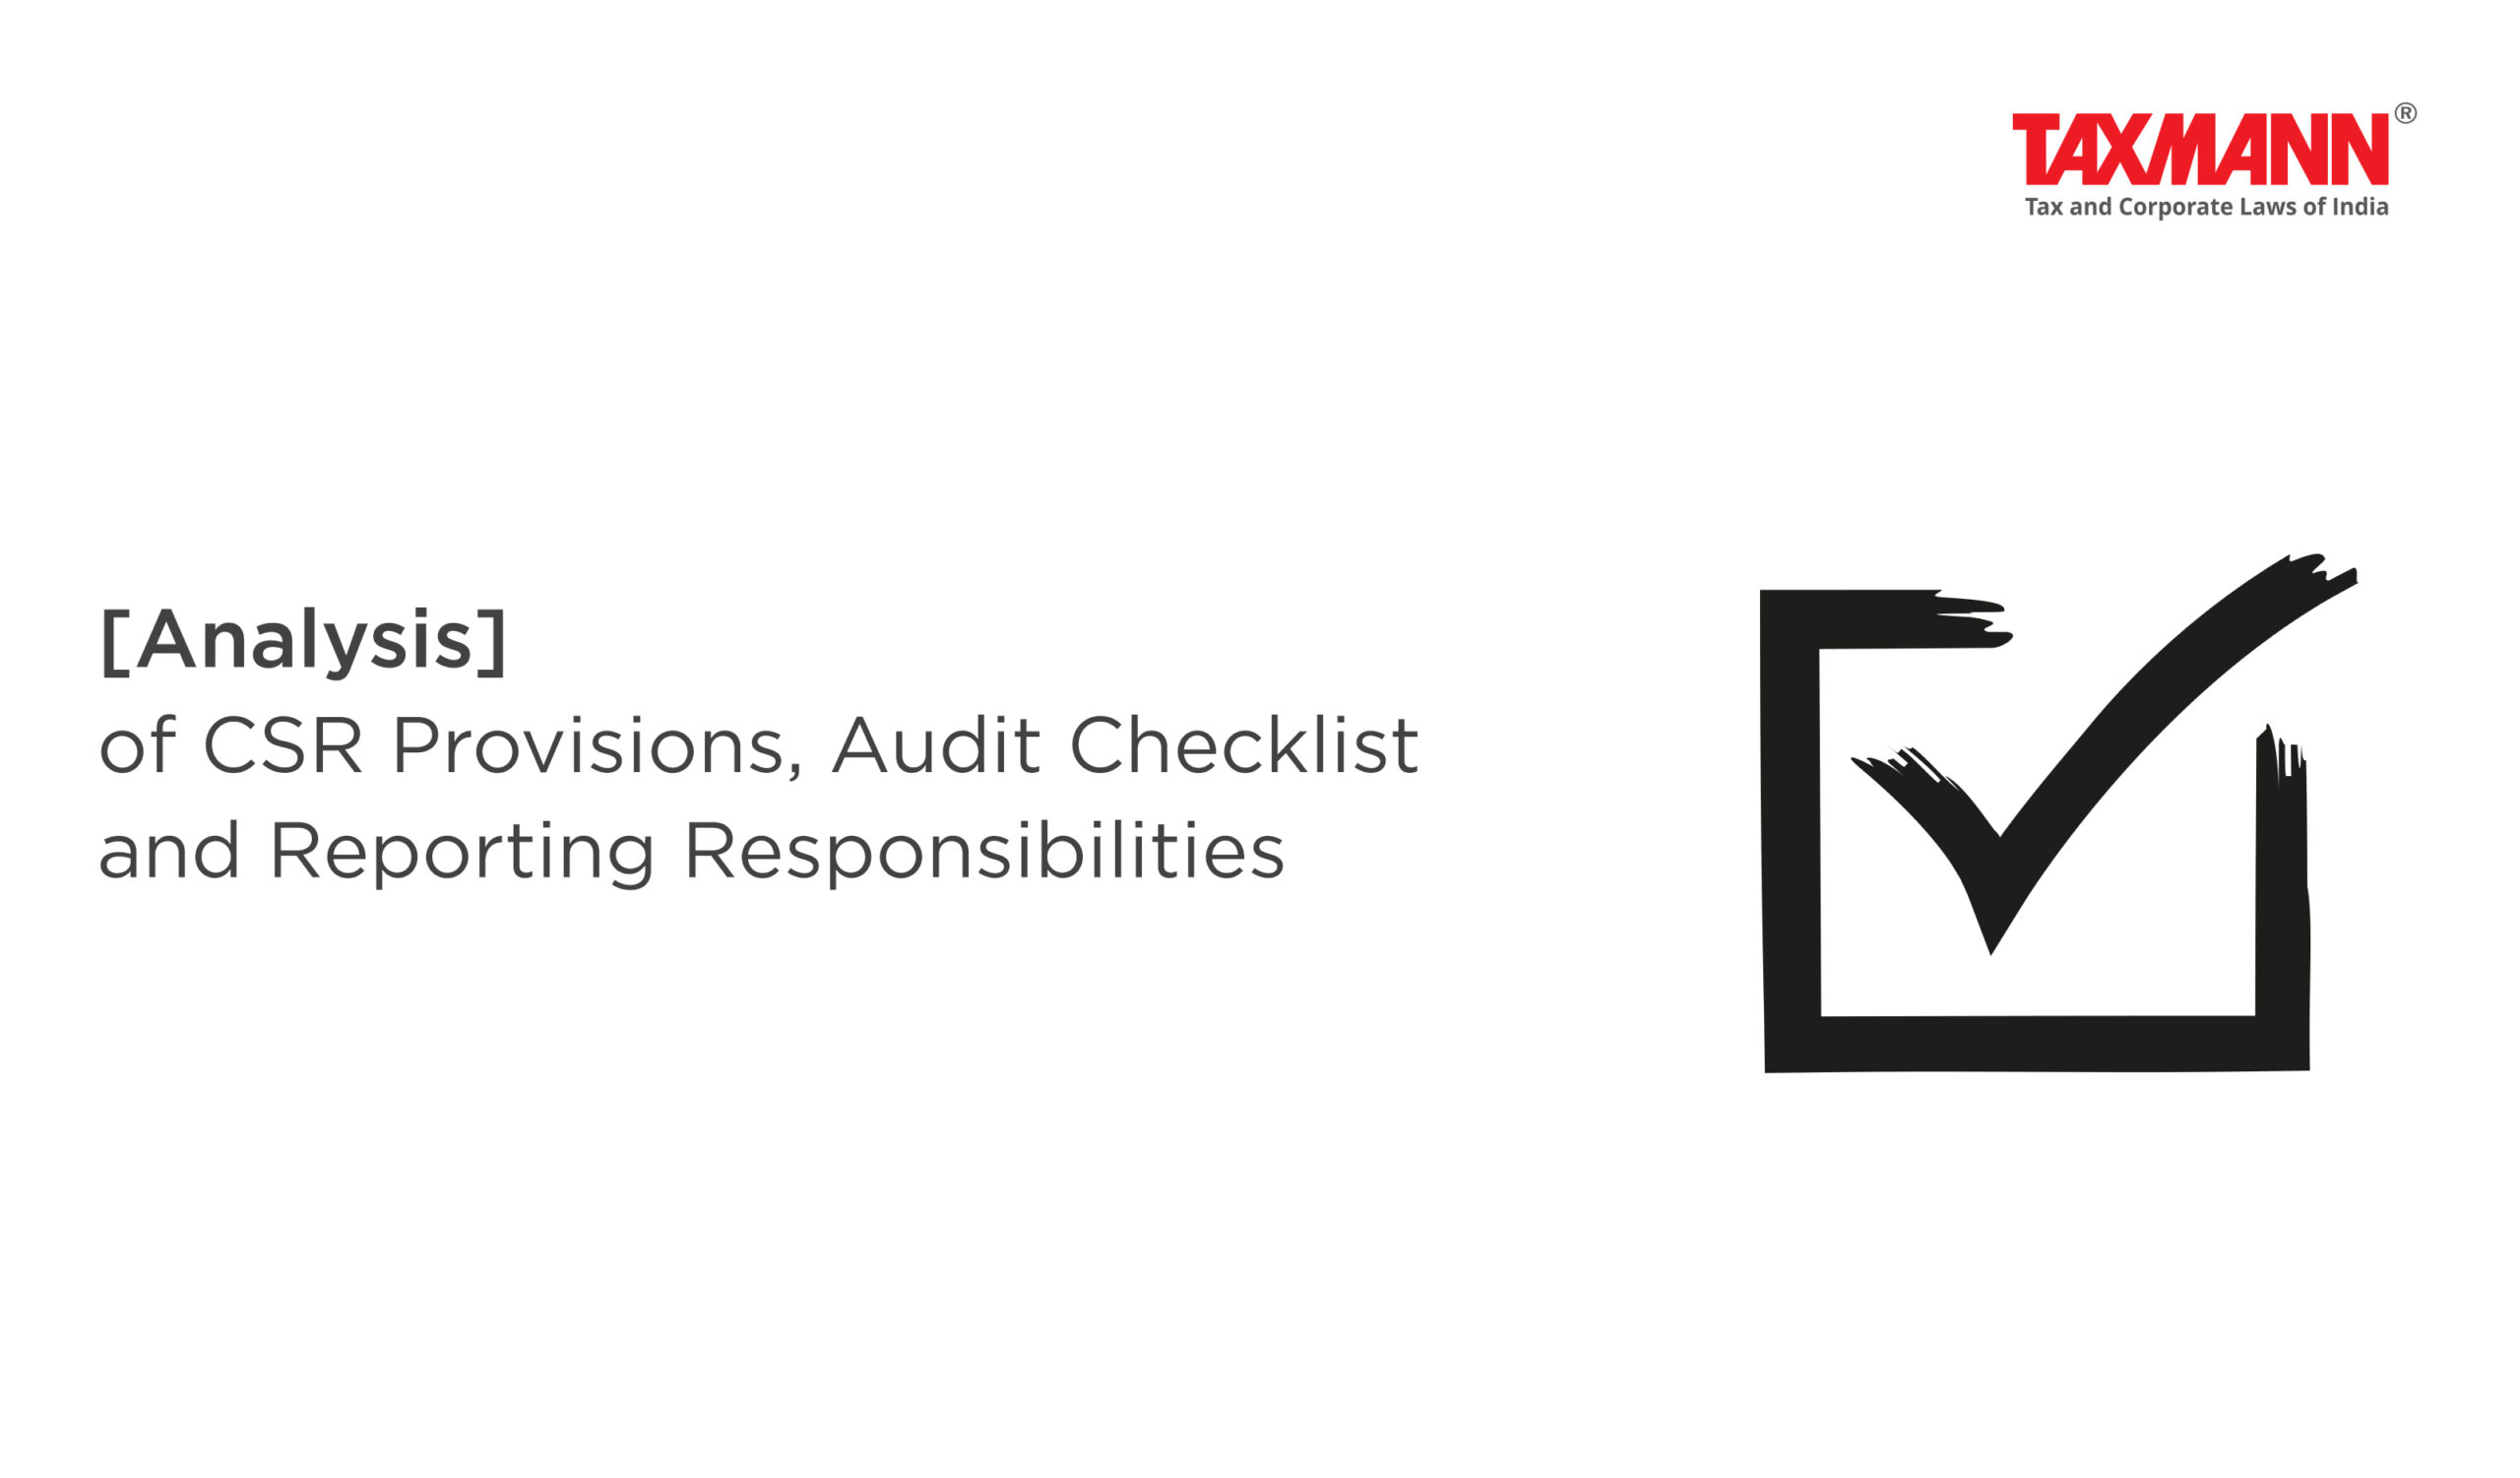 Audit Checklist for CSR Provisions